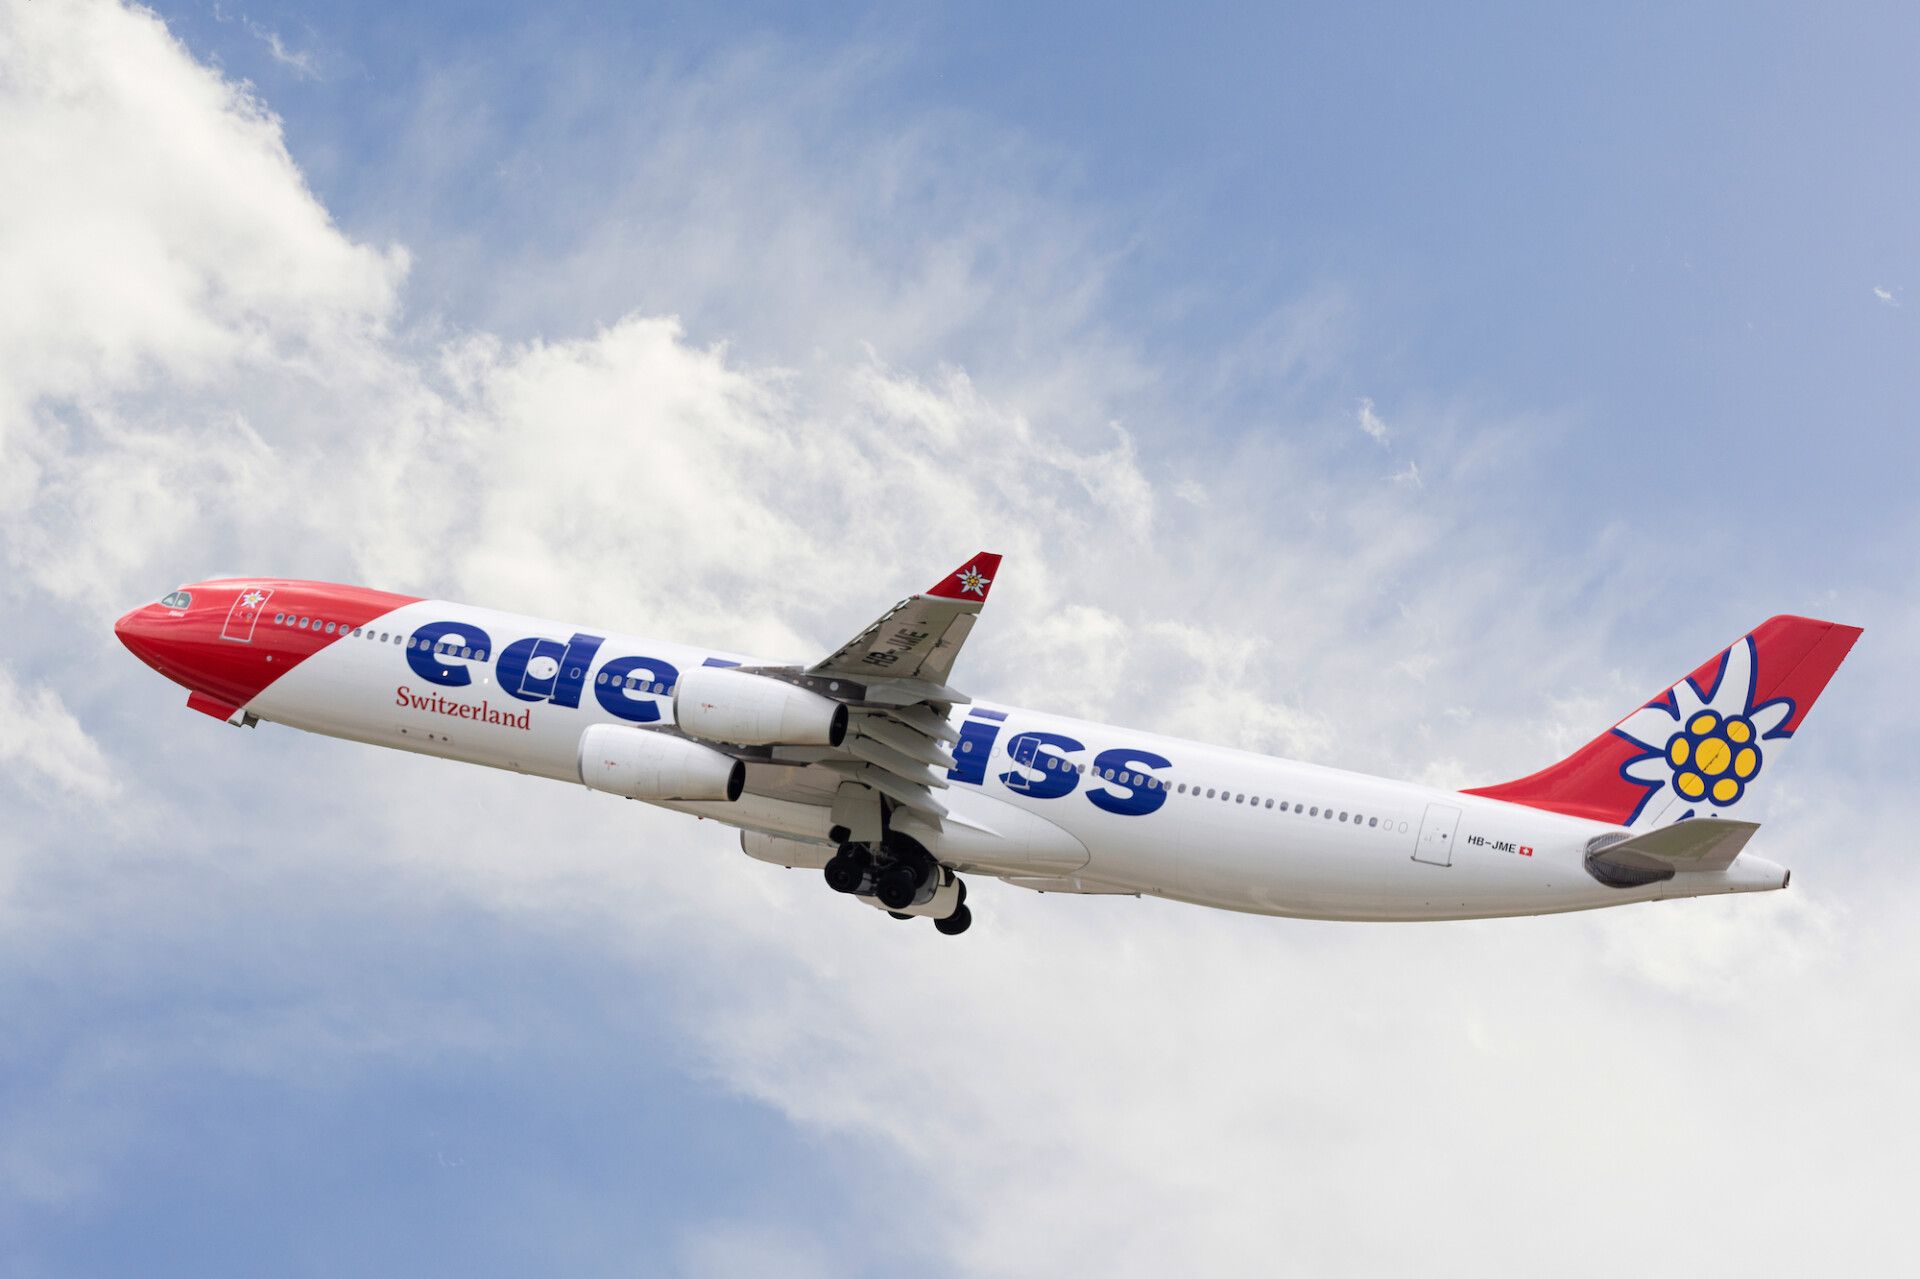 Edelweiss_A340_Takeoff